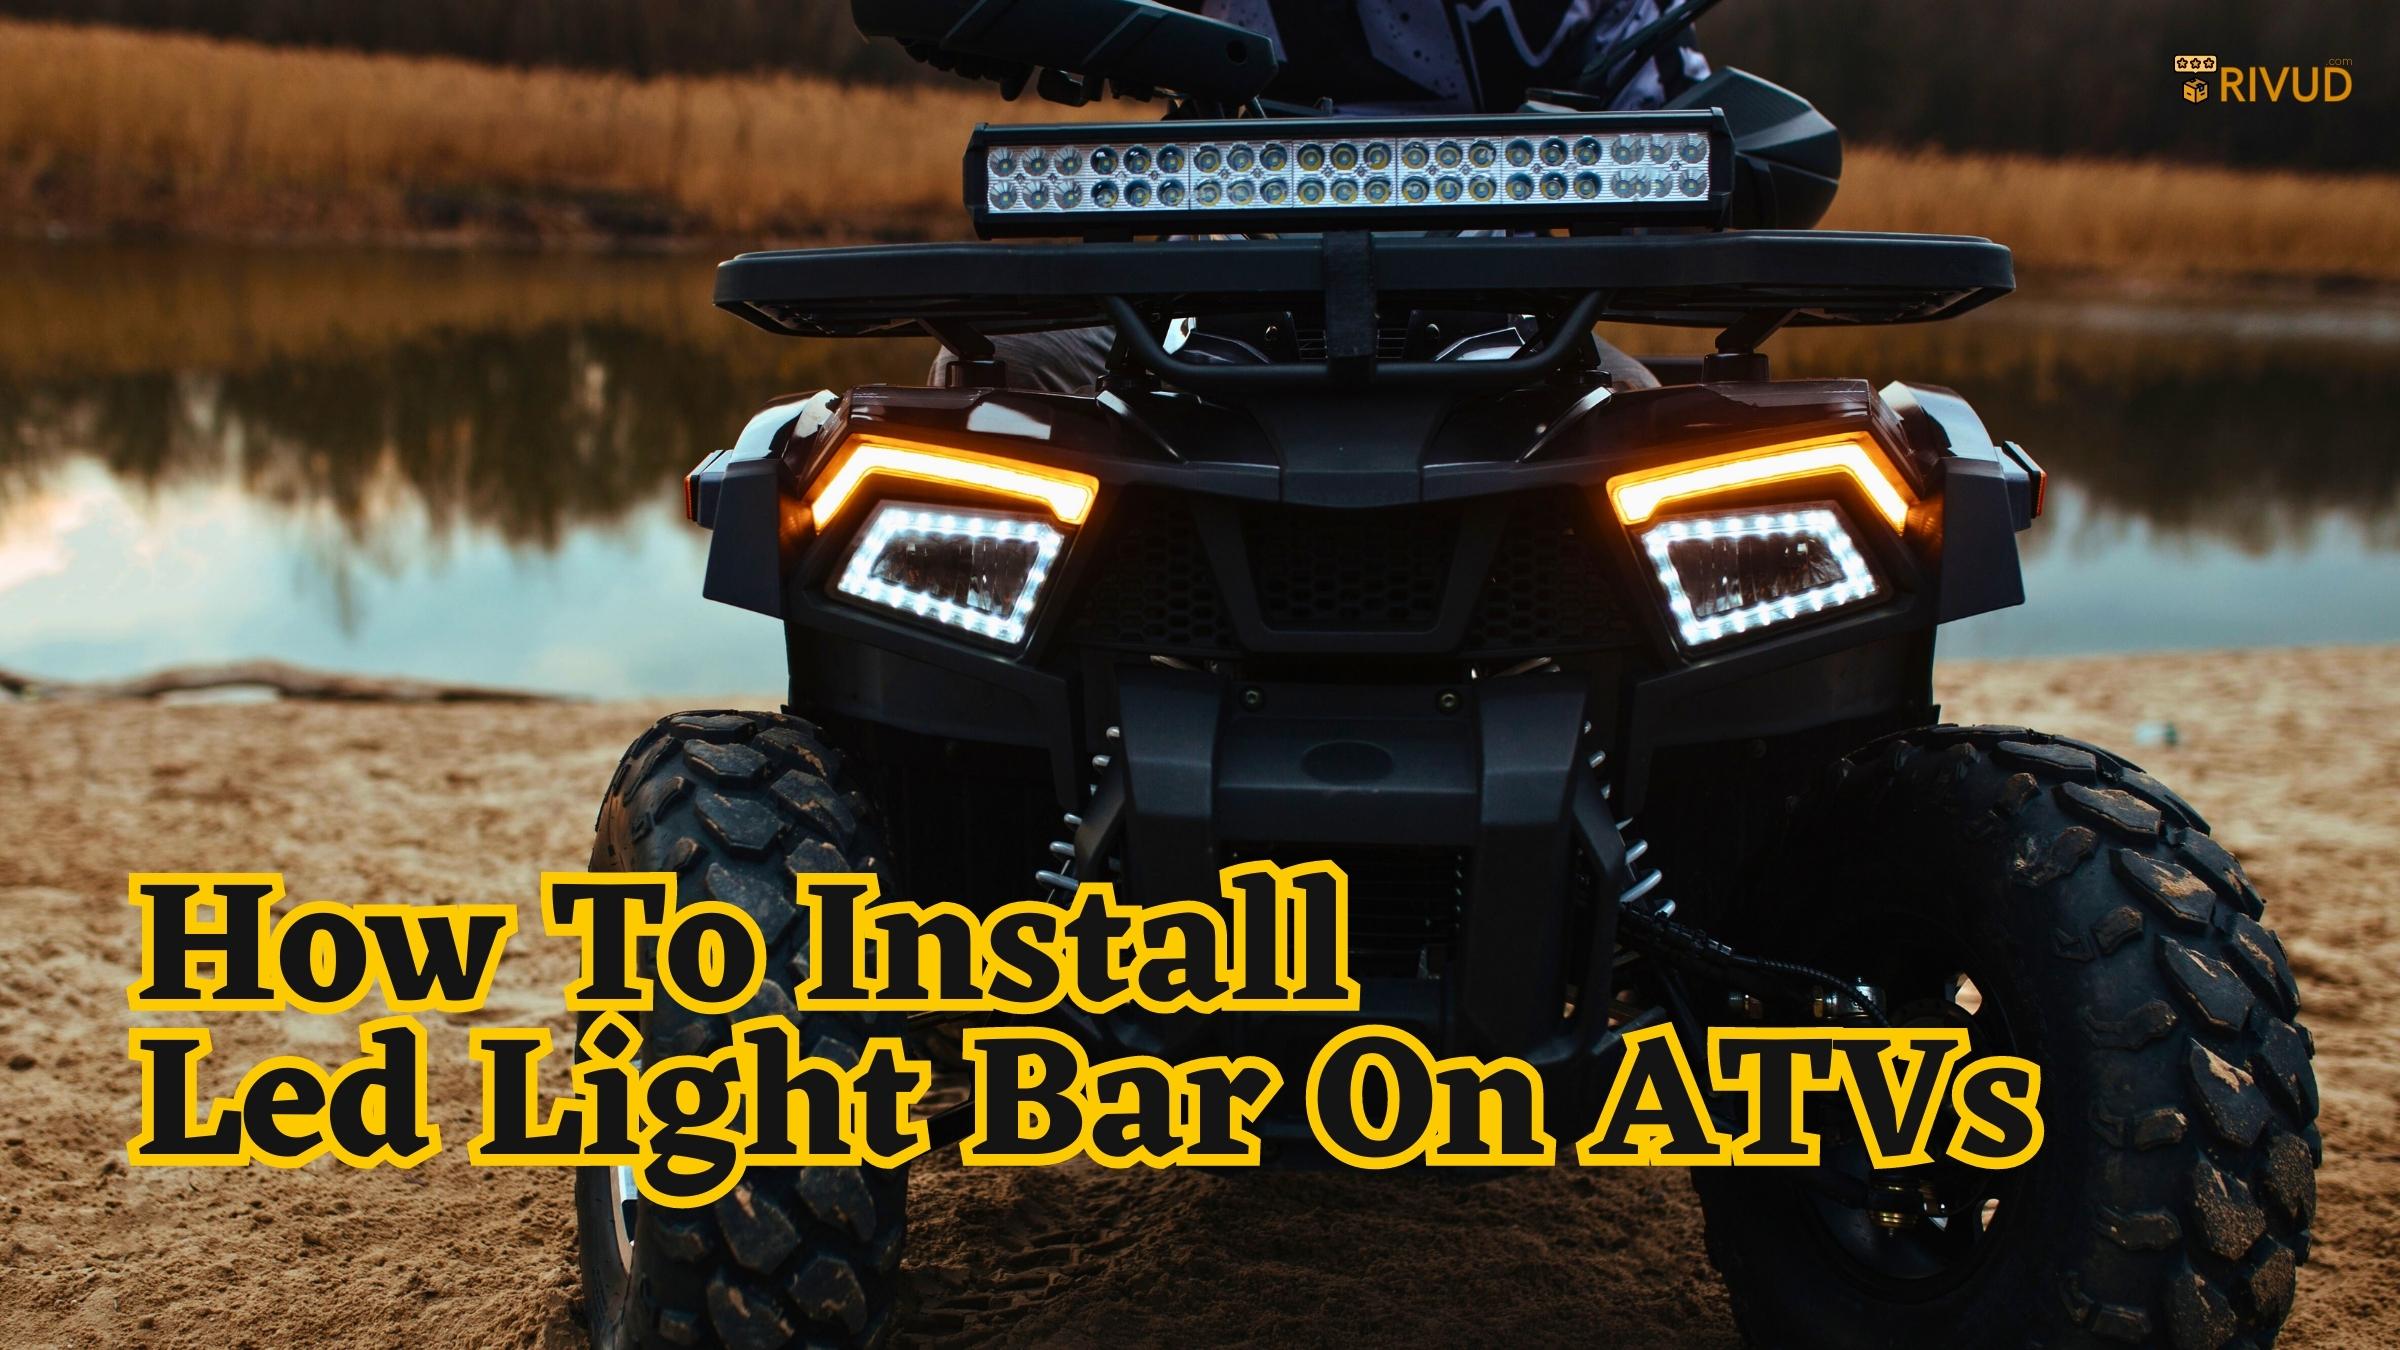 How To Install Led Light Bar On Atv?